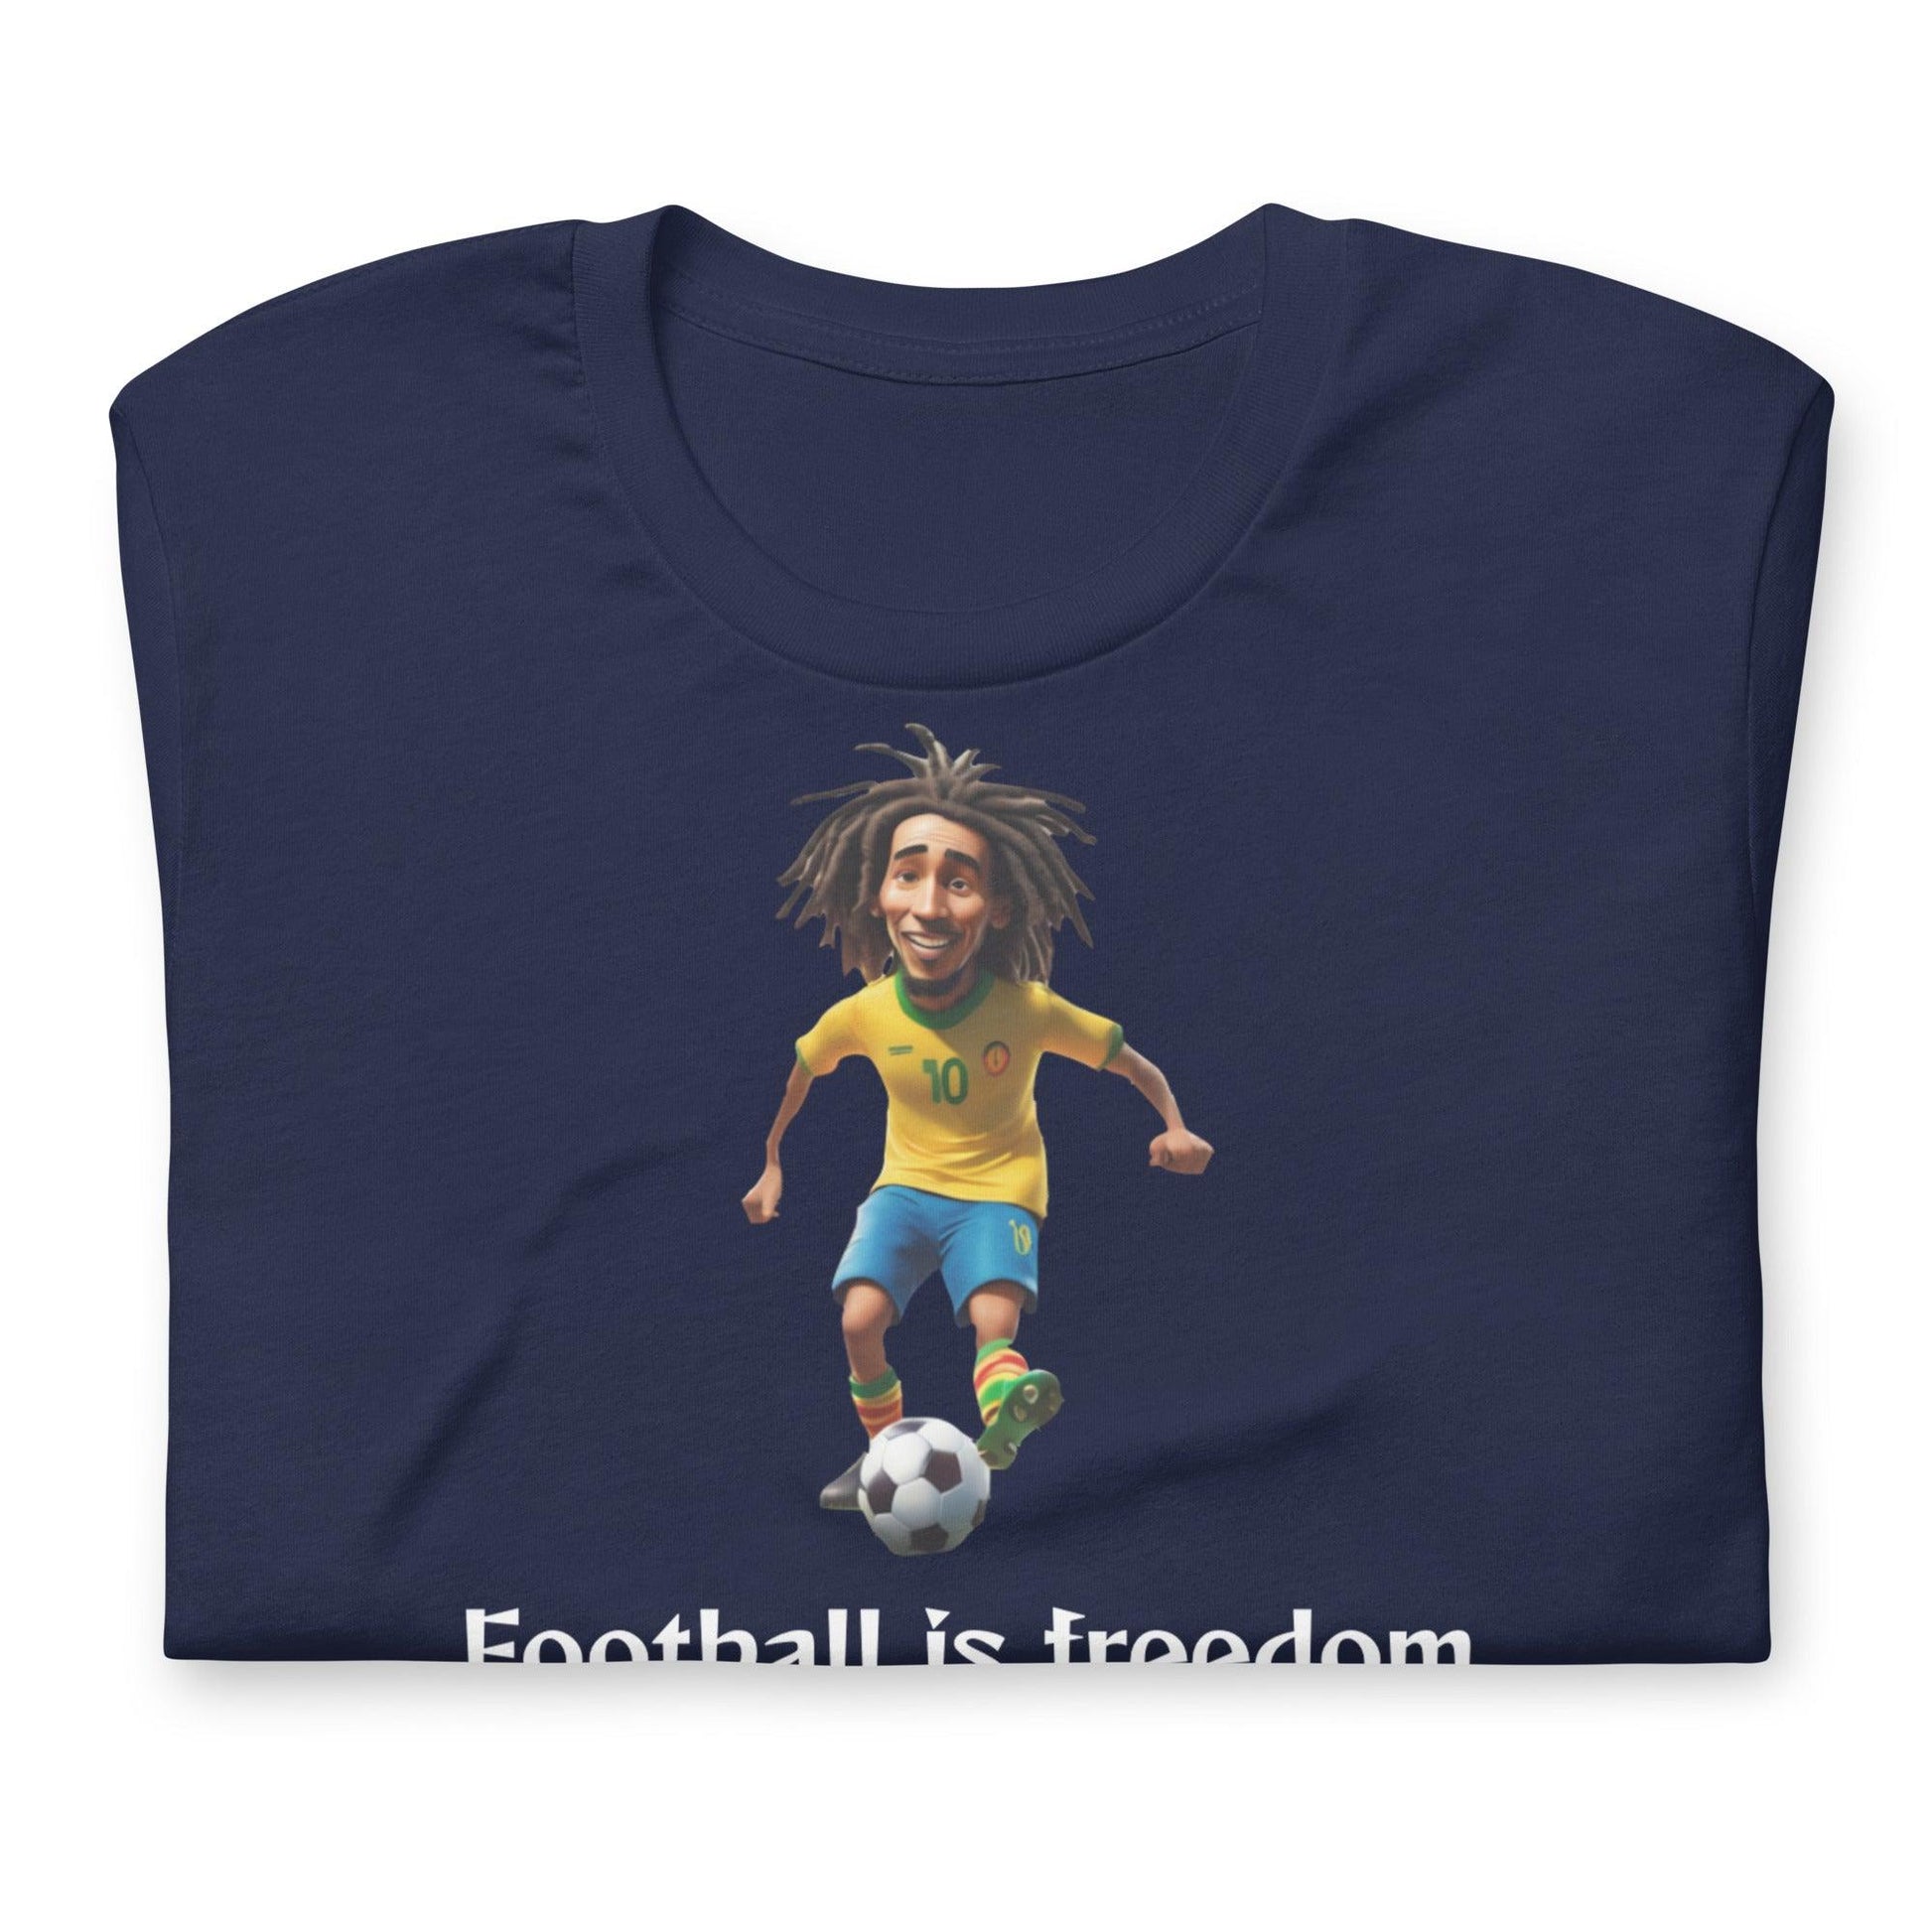 Marley Football Freedom - Game Yarns